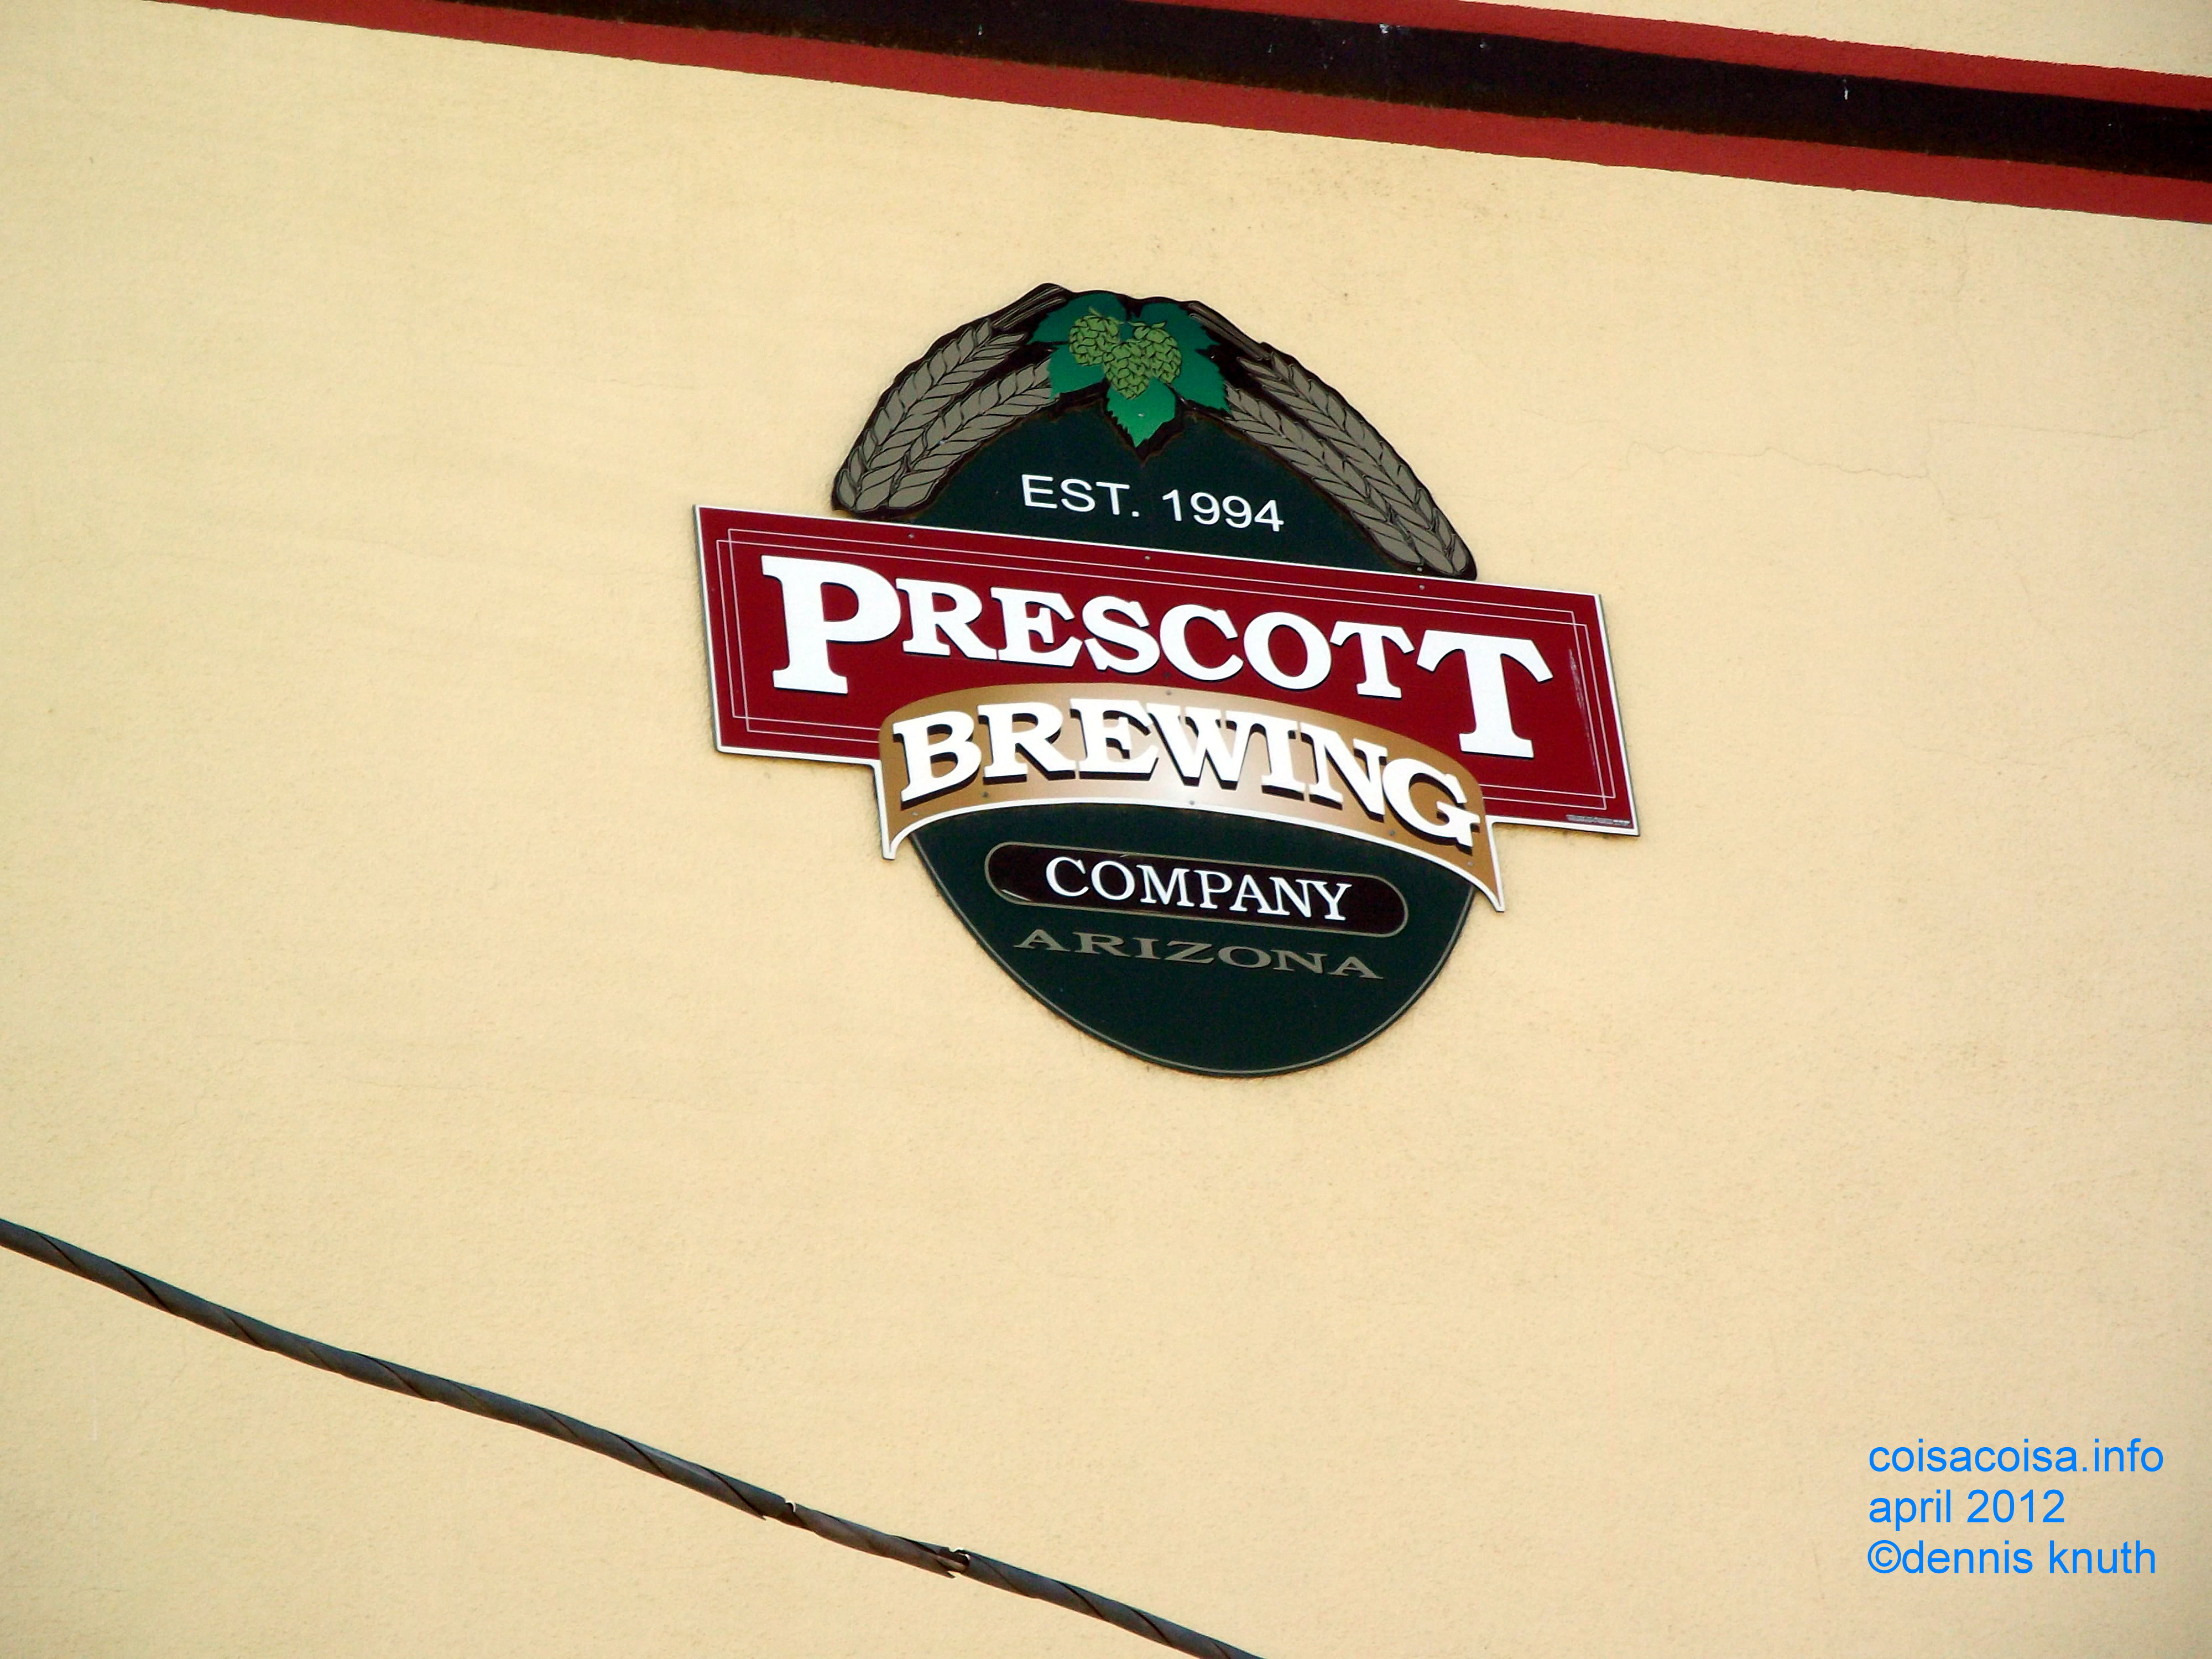 Prescott Brewing Company started 1994